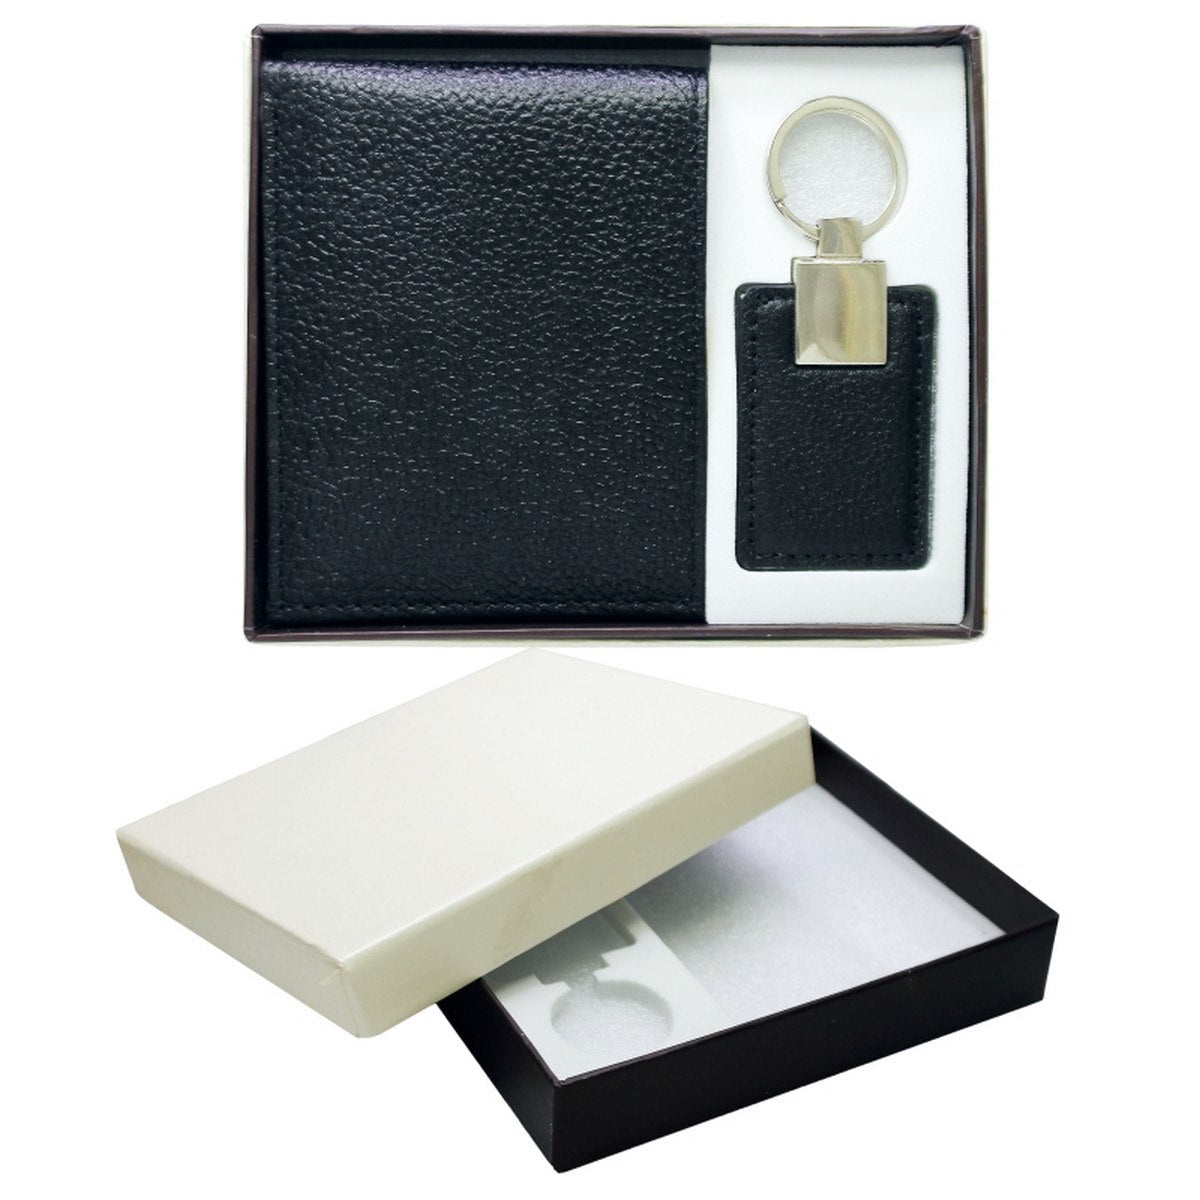 jags-mumbai Gifts Set Gifts Set Crocodile Keychain With Wallet Black 7482BK